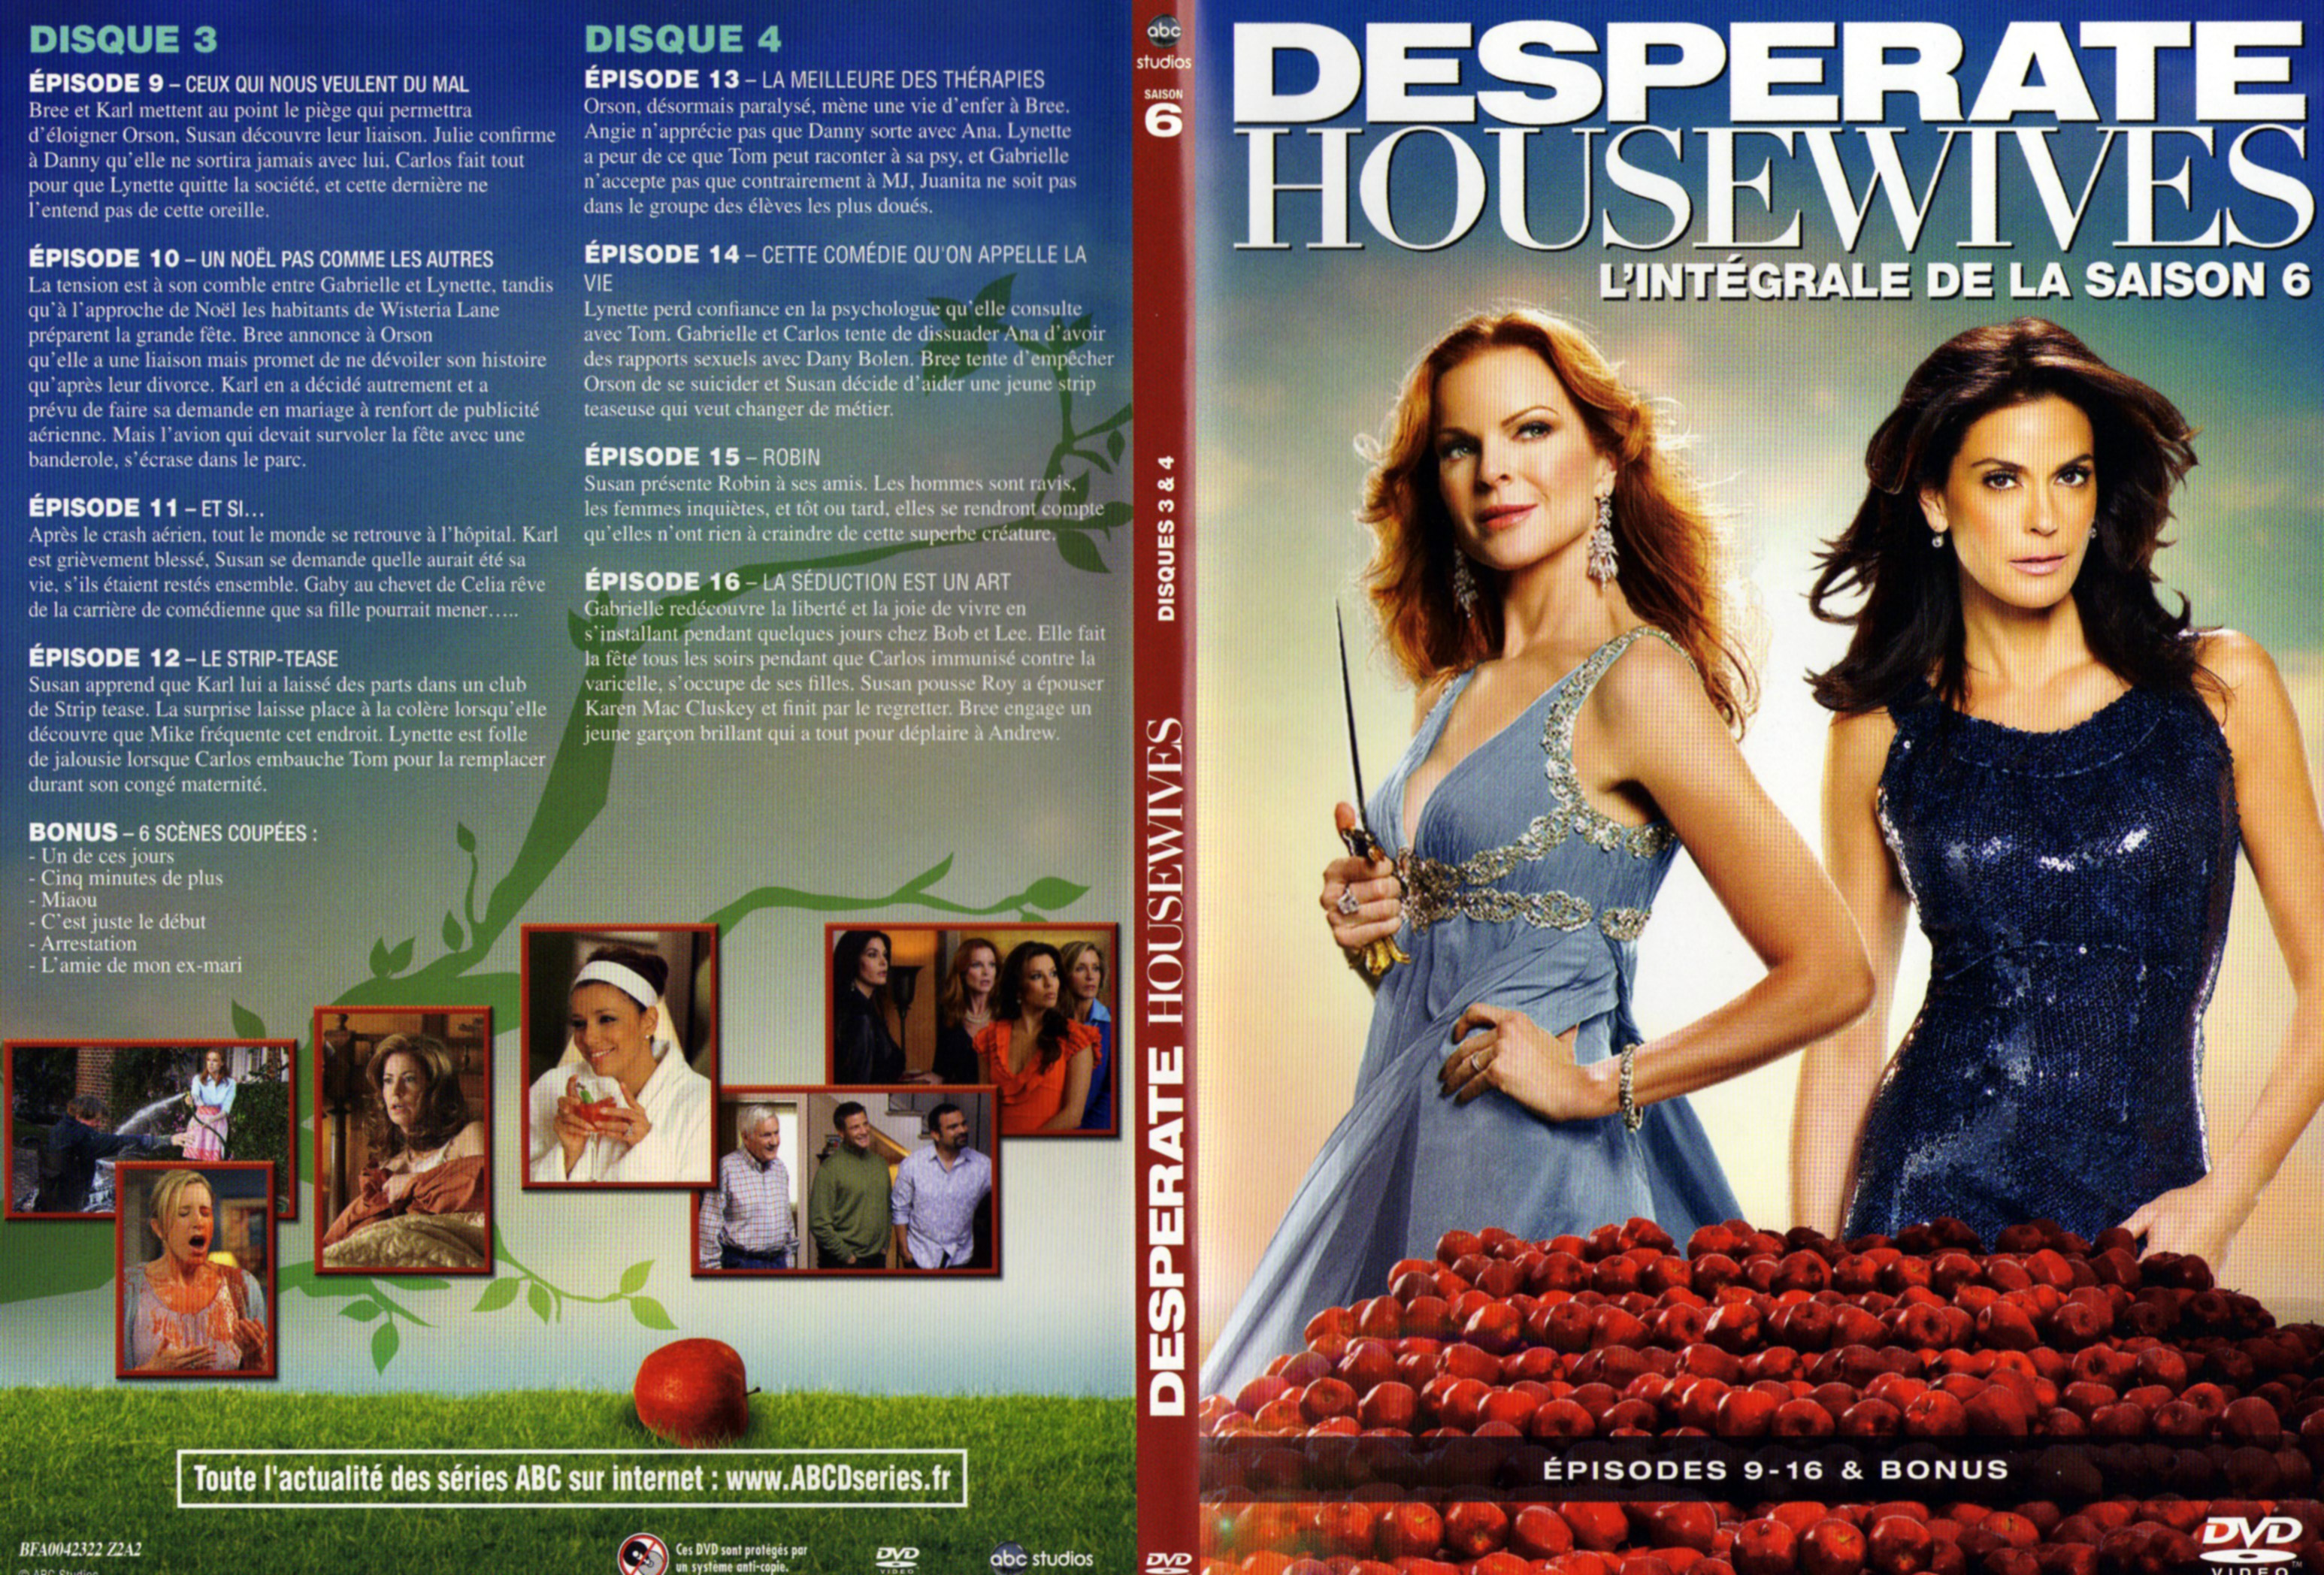 Jaquette DVD Desperate housewives Saison 6 DVD 2